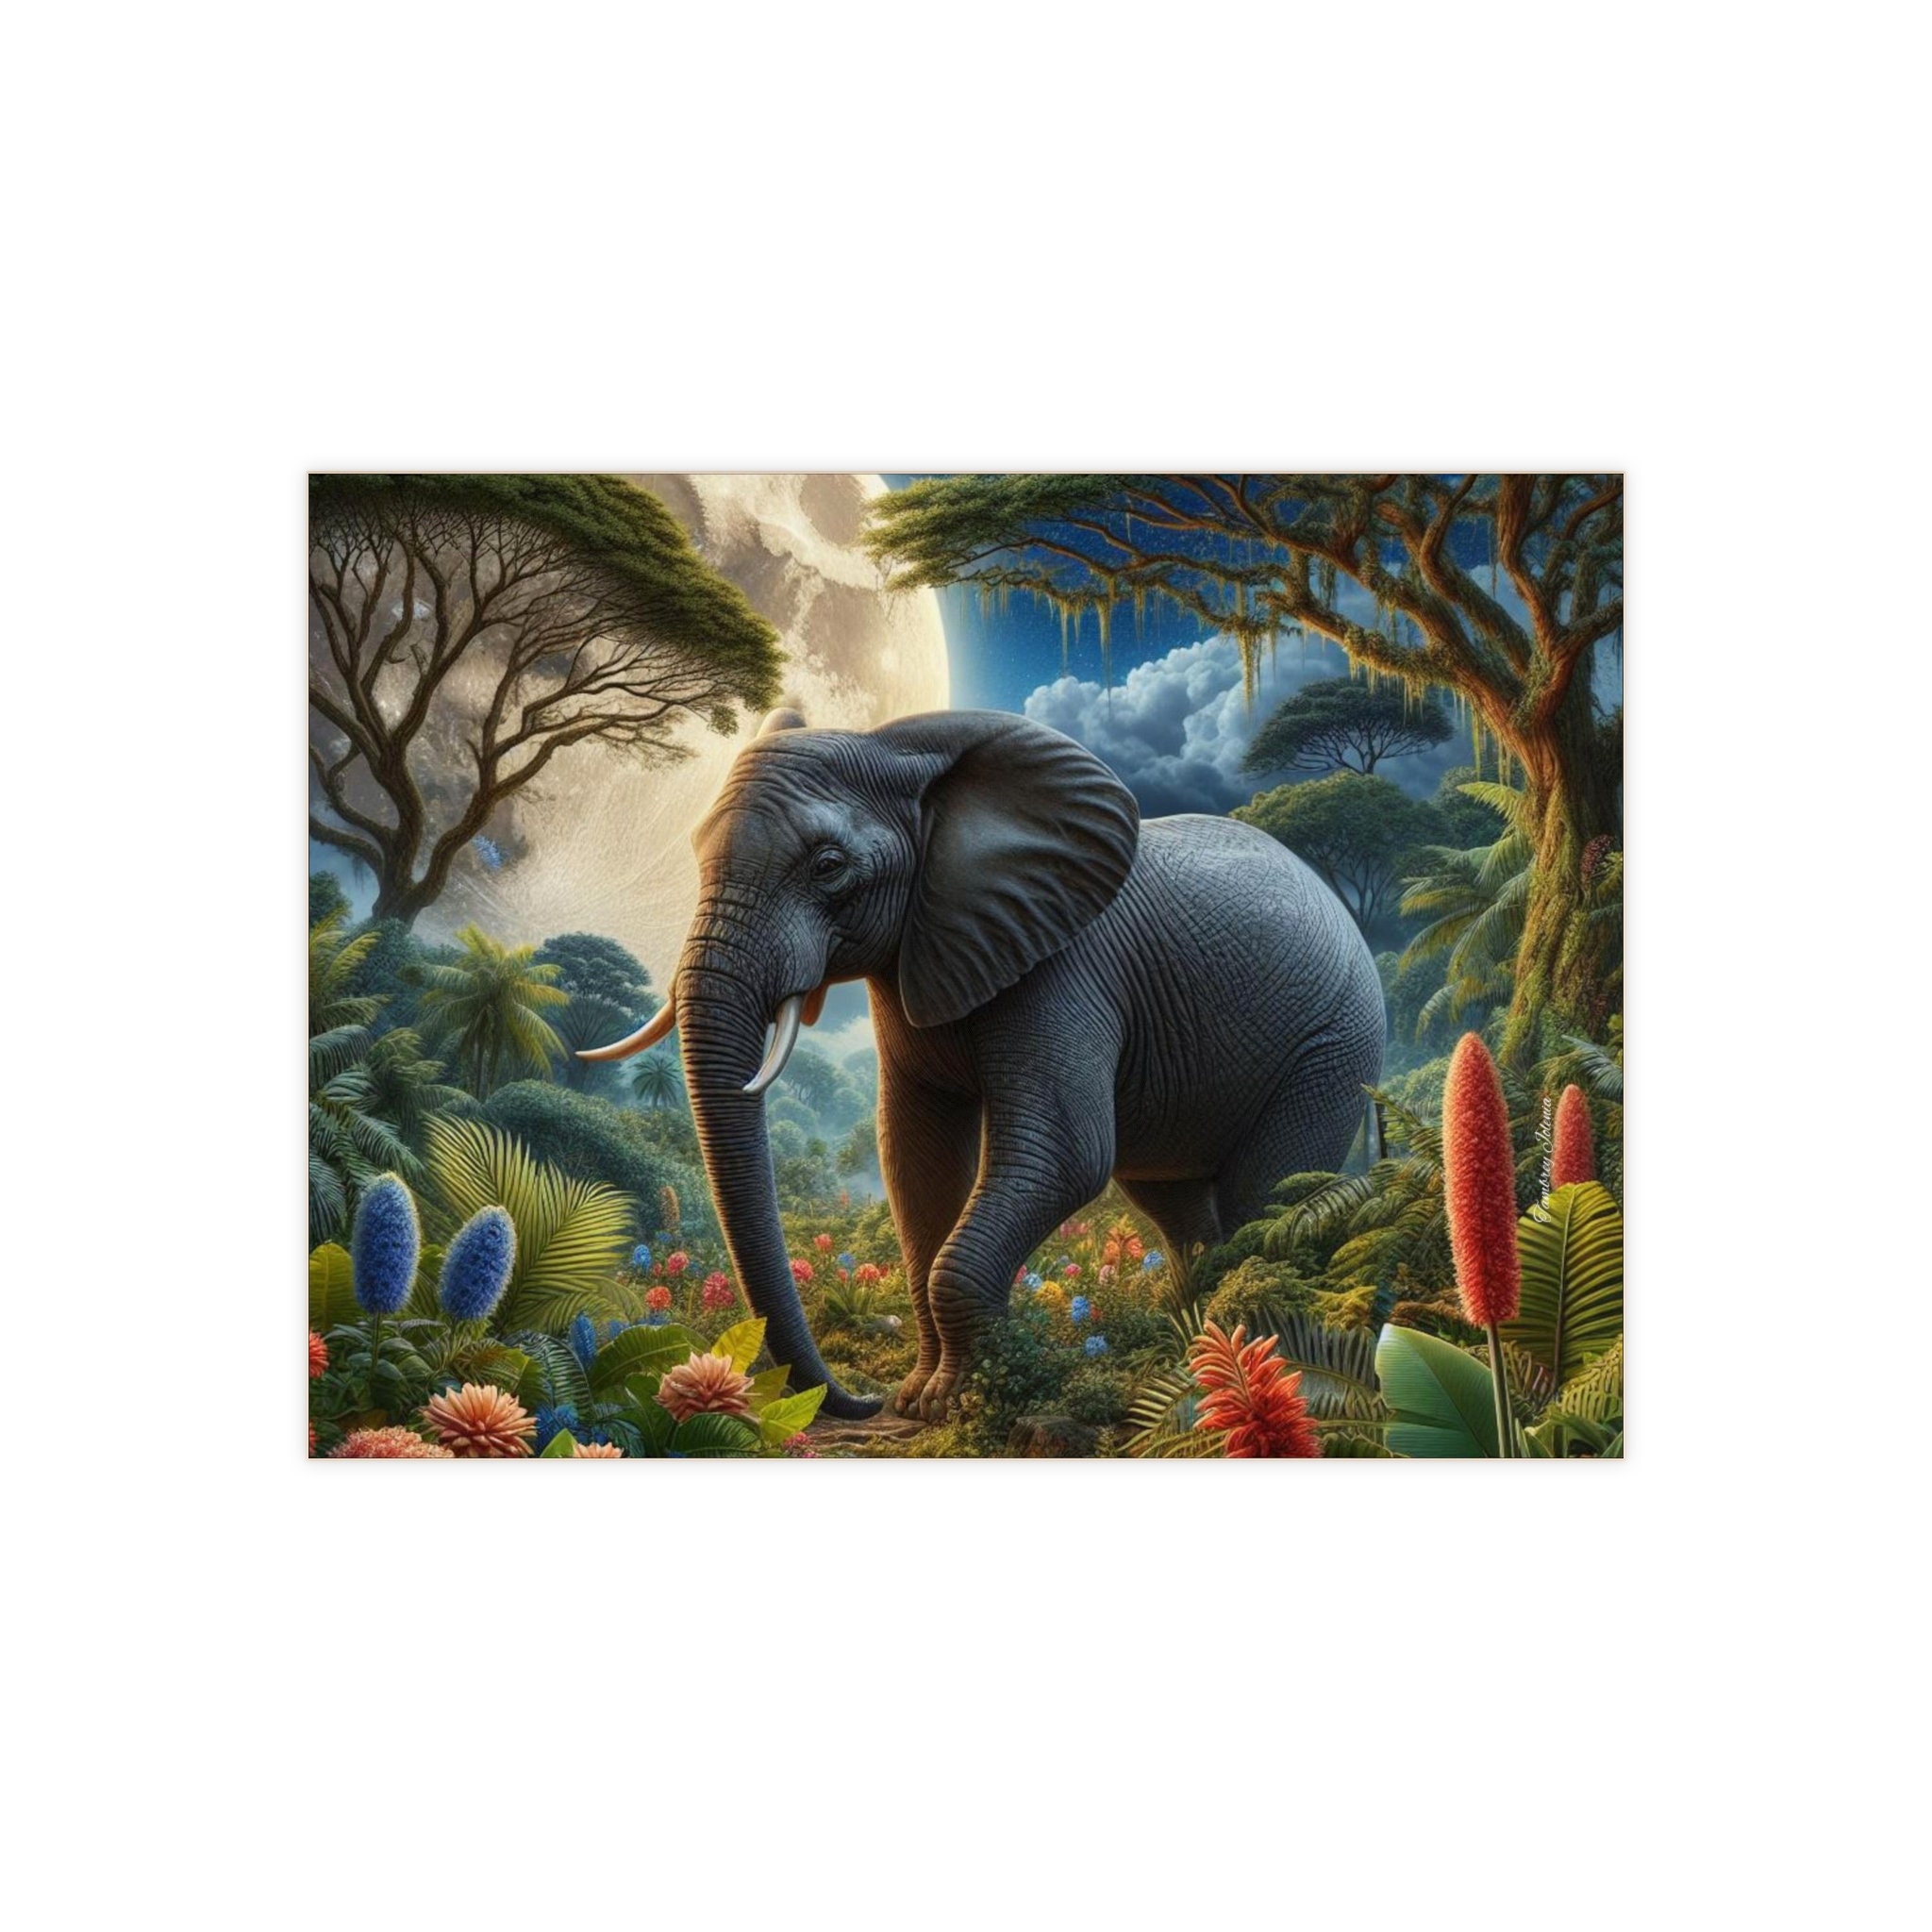 The African Elephant Ceramic Photos Tile, Home Decor